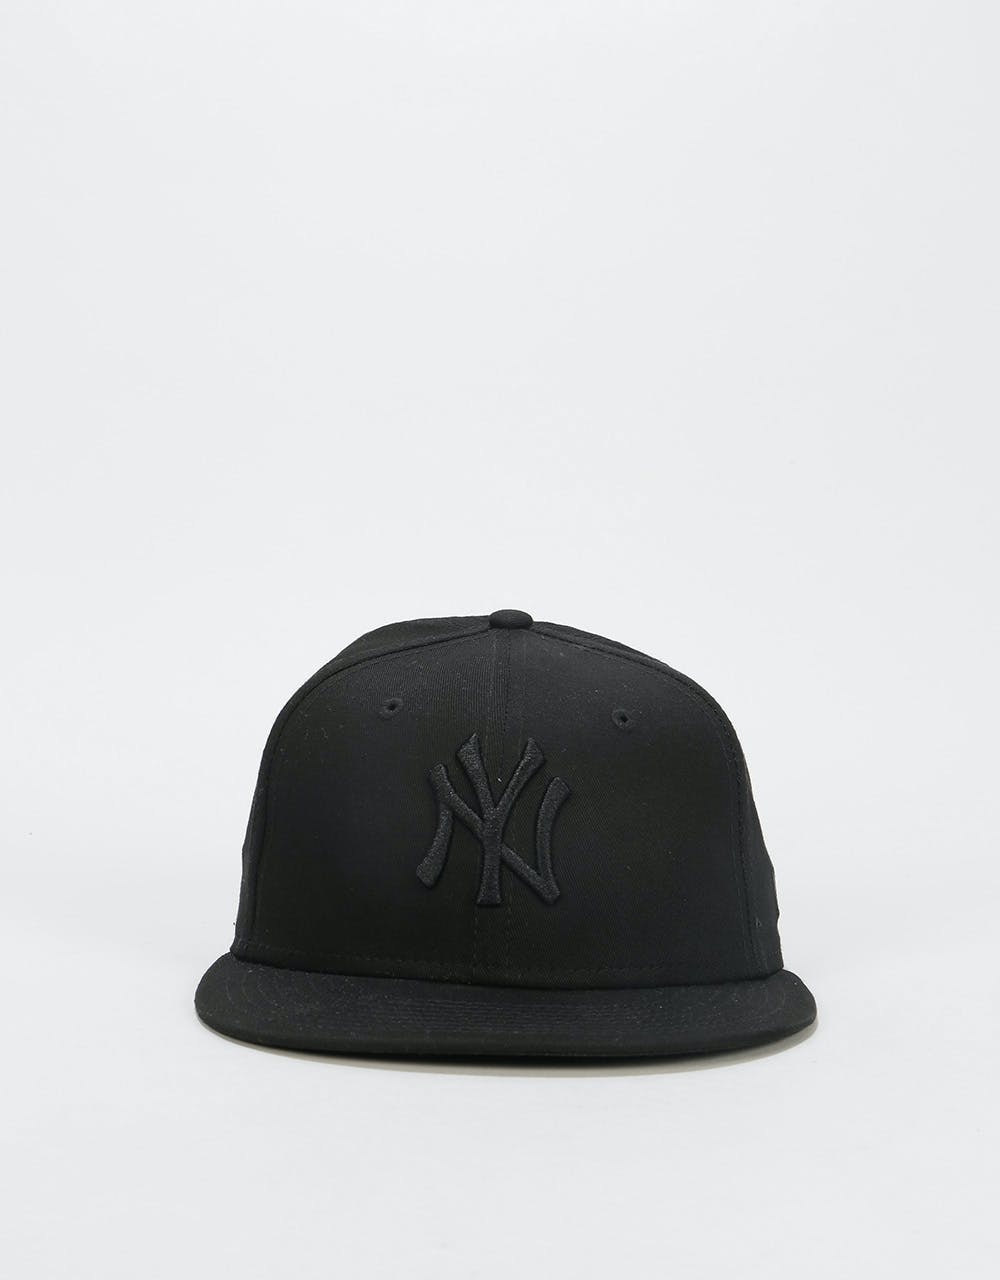 New Era 9Fifty MLB New York Yankees Snapback Cap - Black/Black